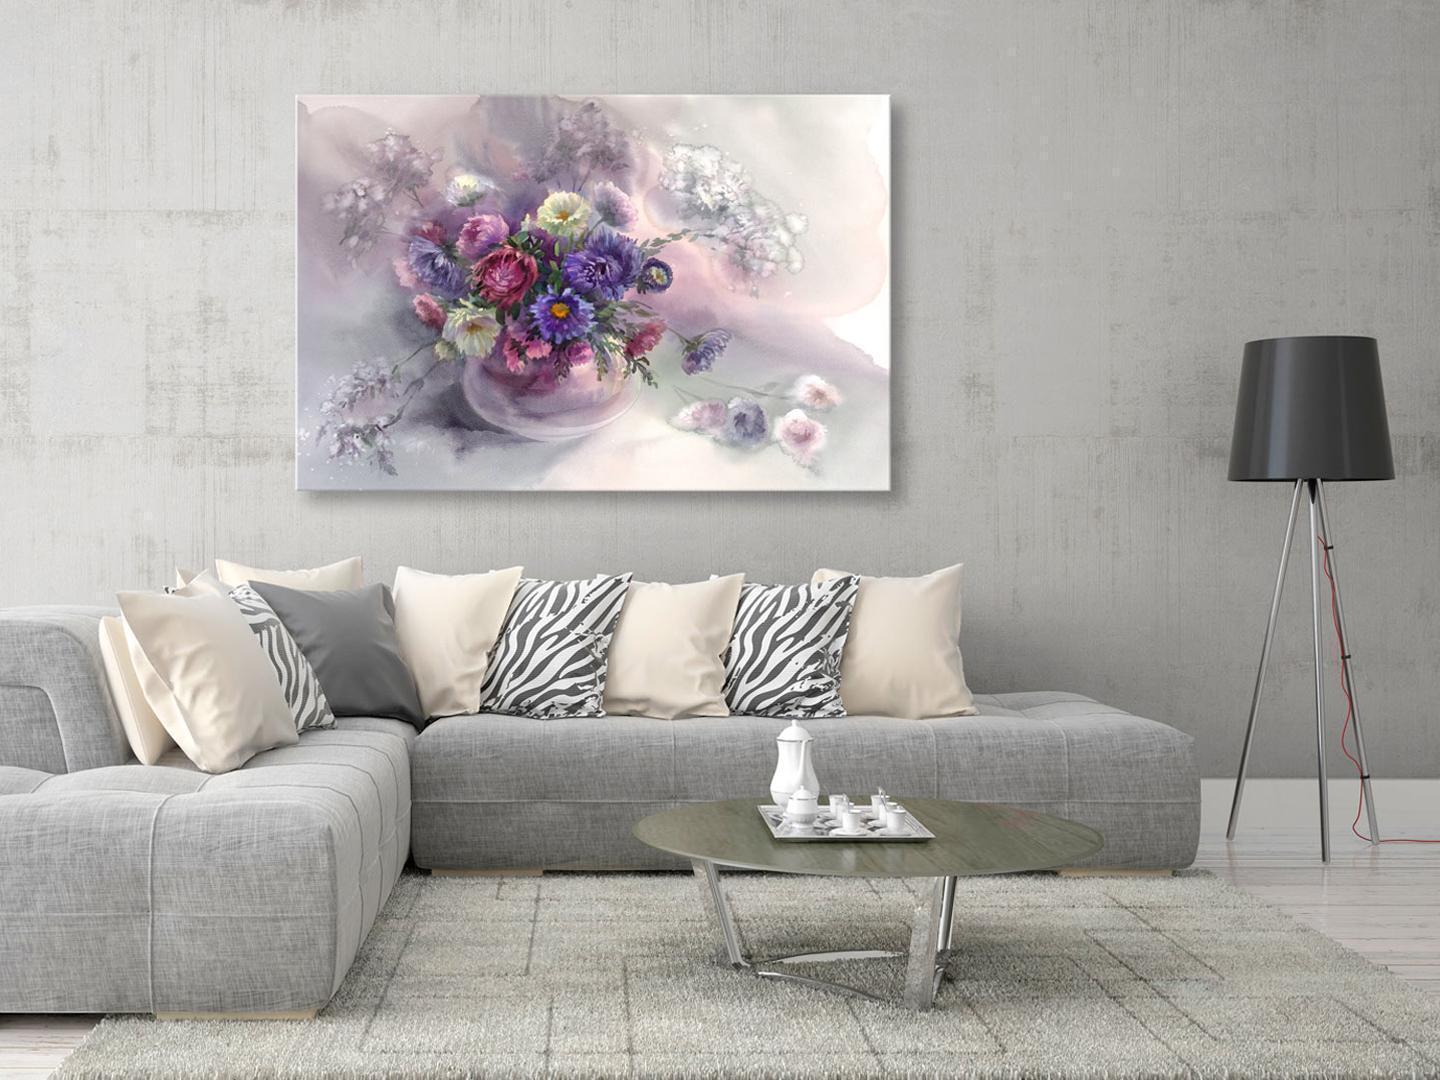 Painting - Dreamer's Bouquet